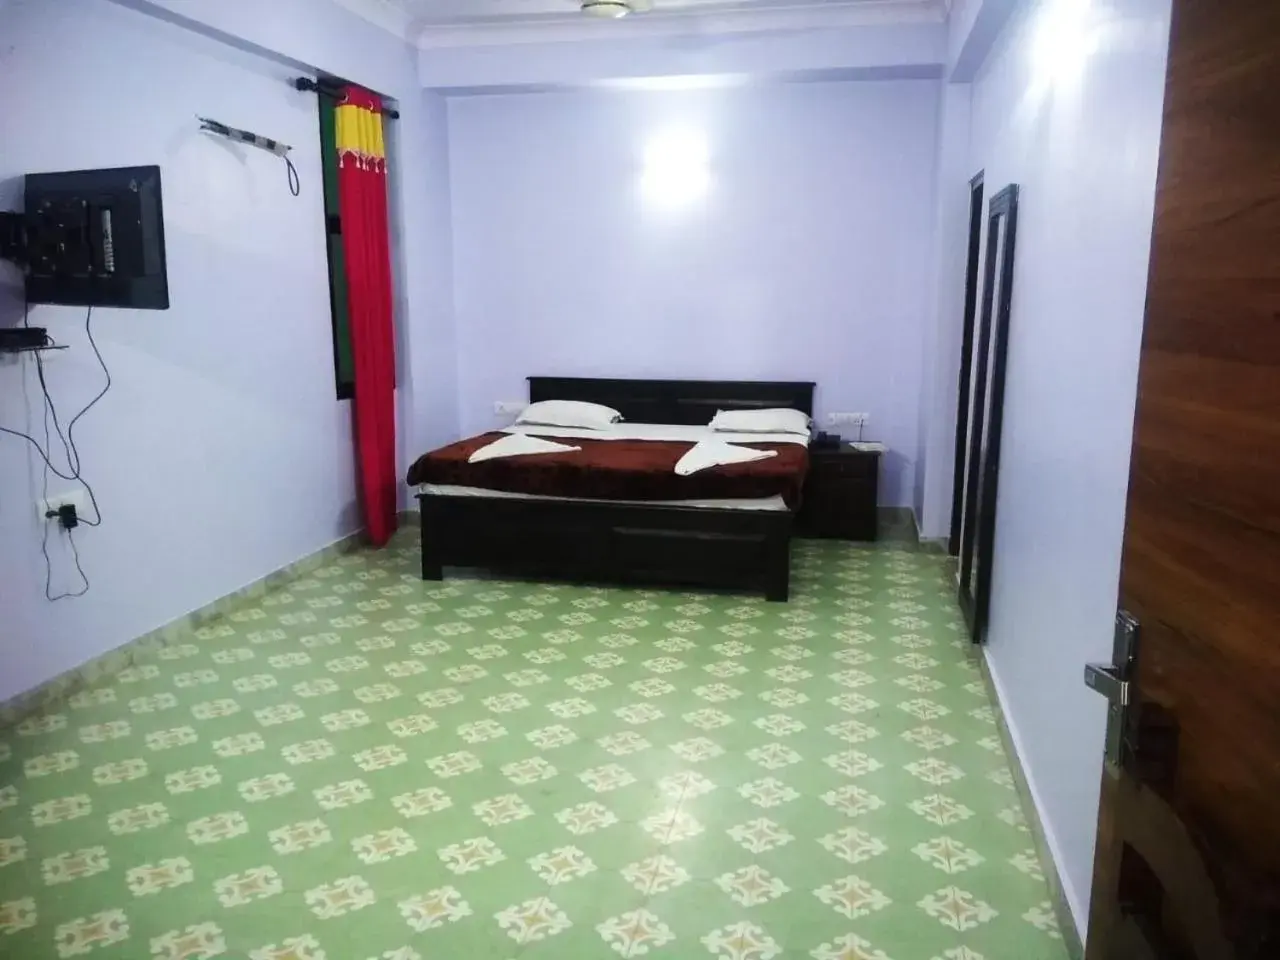 Bed in Rani Mahal Hotel